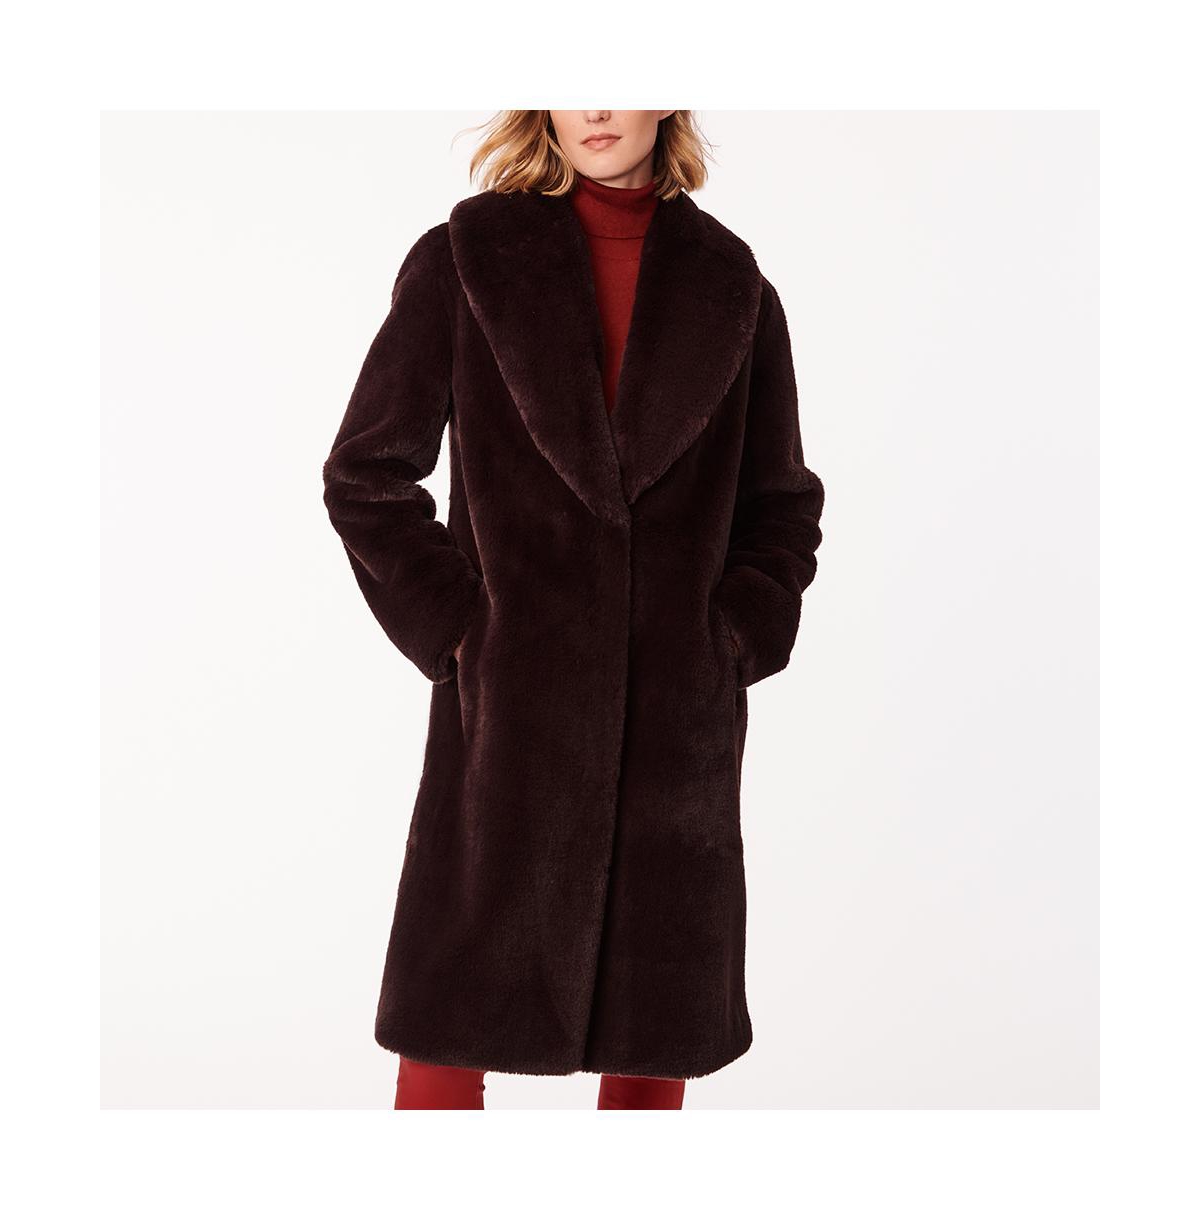 Women's Shawl Collar faux fur Coat - Cherrywood